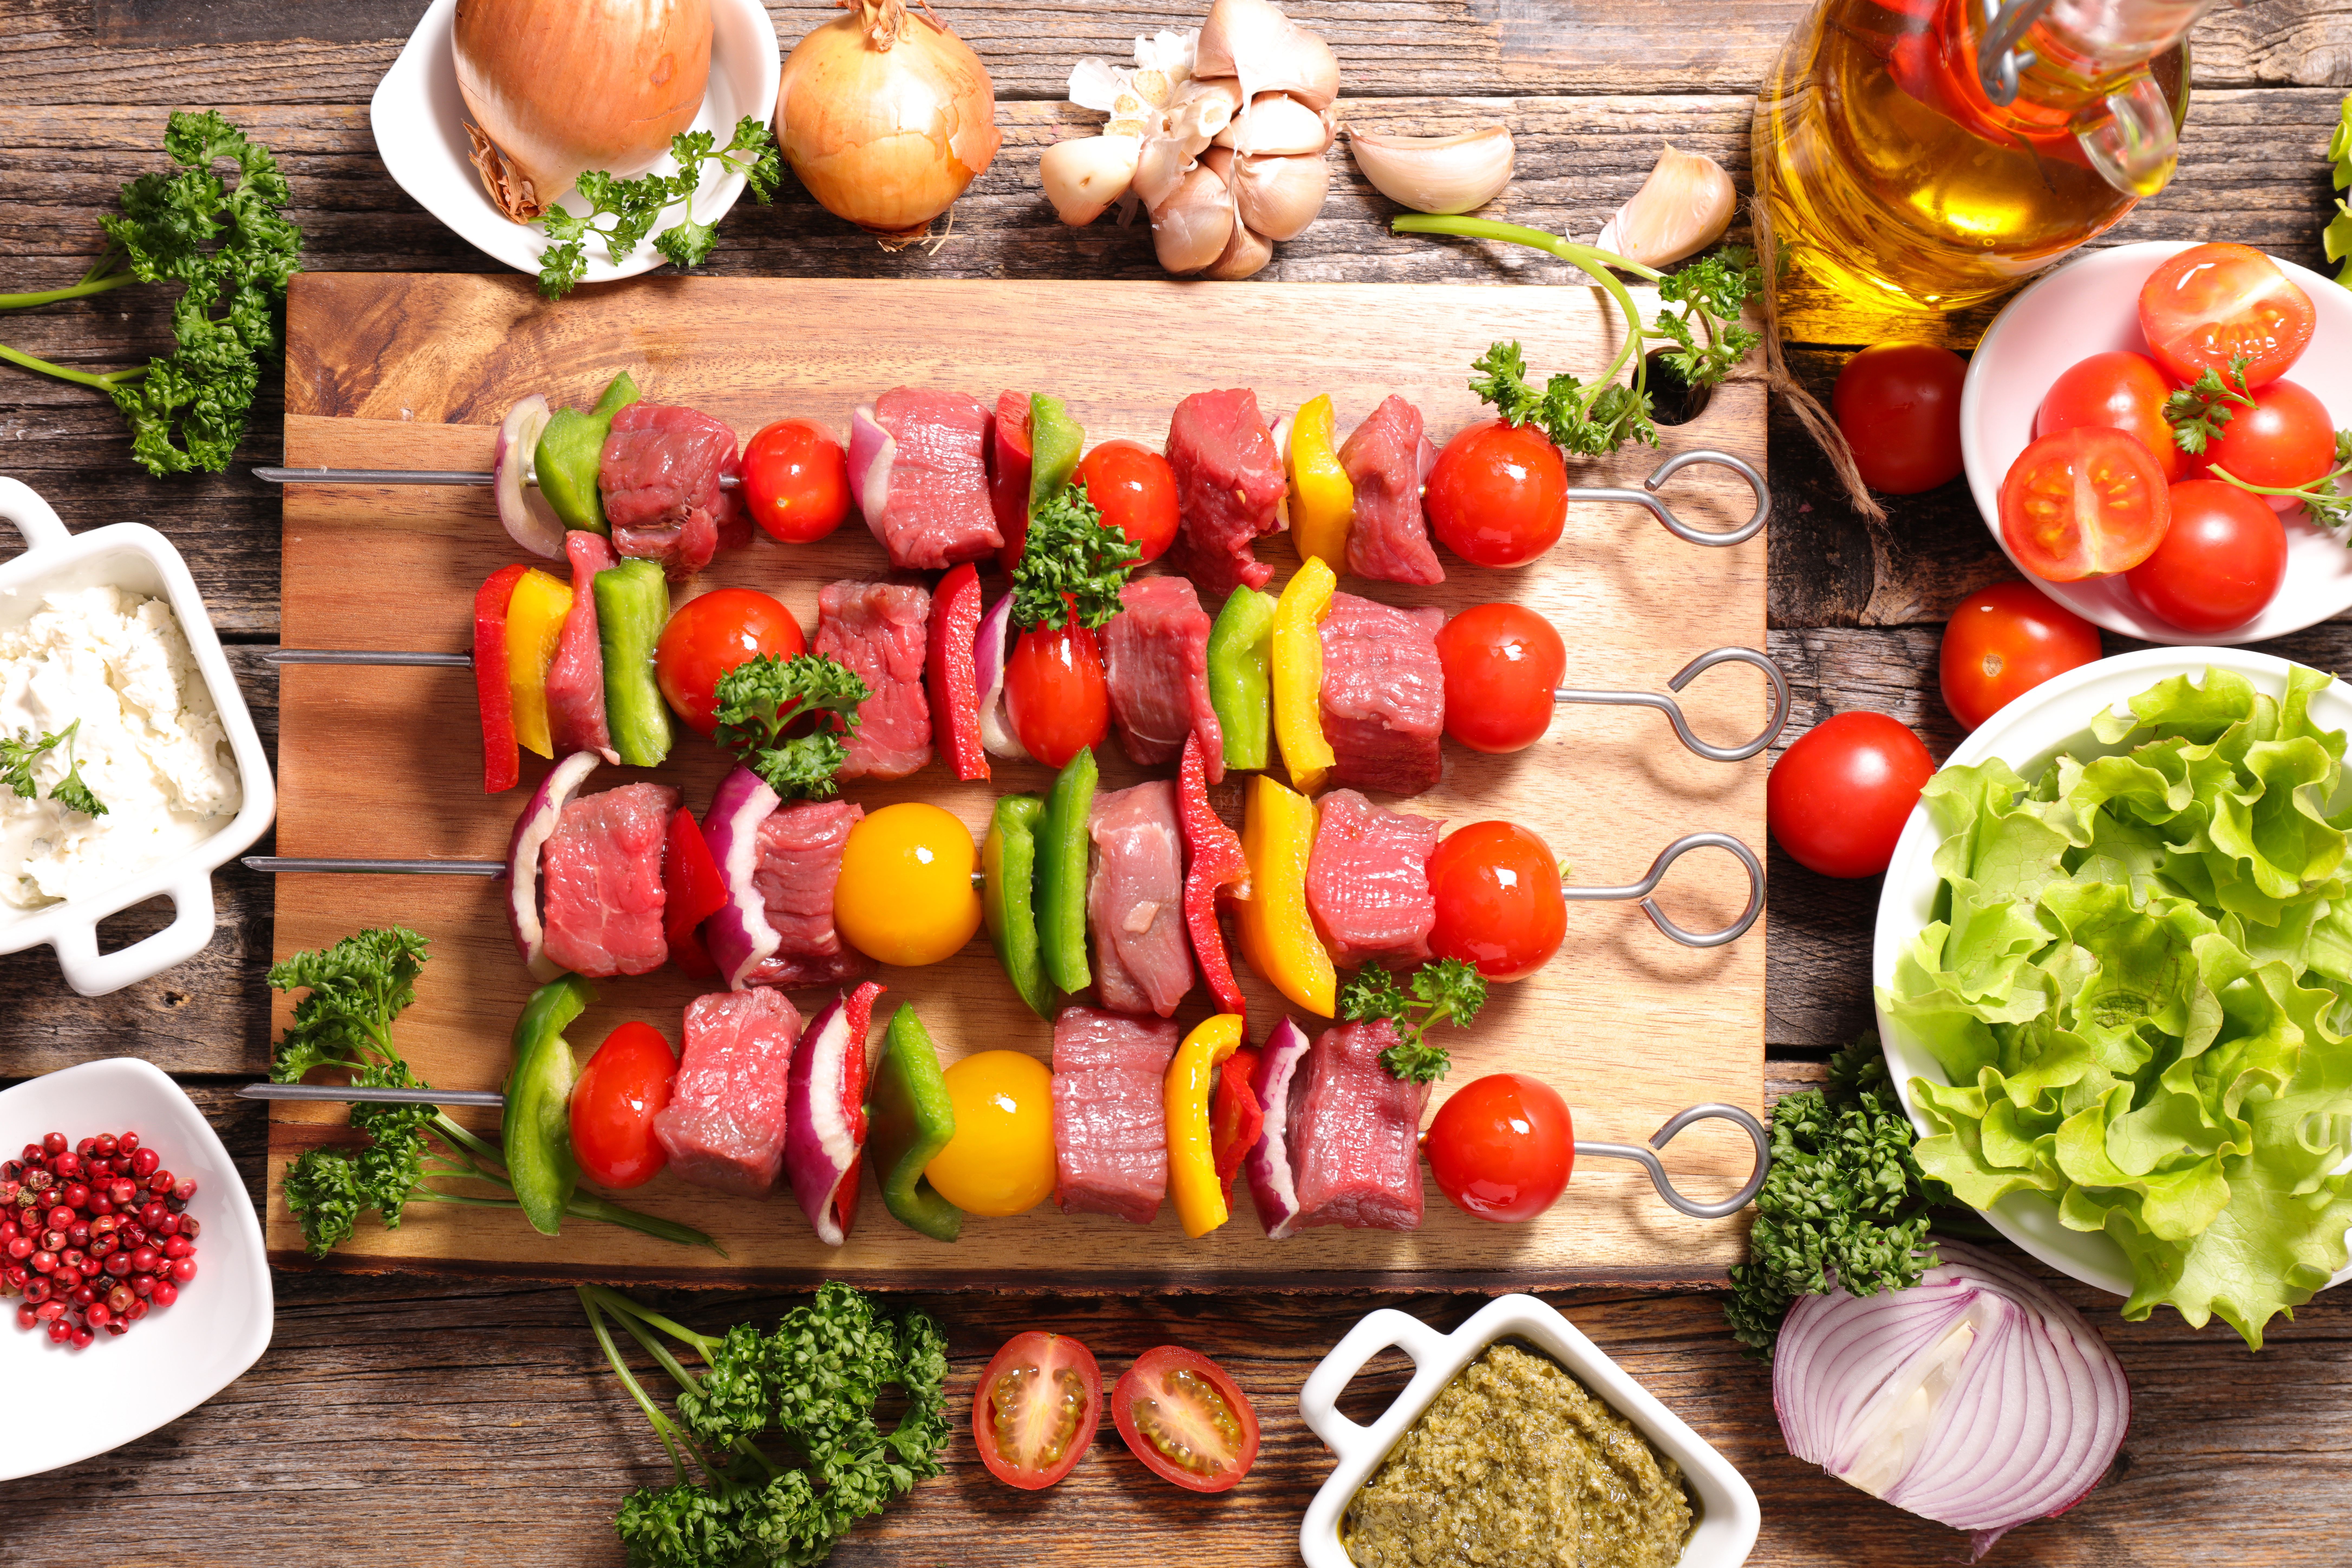 Descarga gratis la imagen Carne, Tomate, Barbacoa, Alimento, Bodegón, Lechuga en el escritorio de tu PC